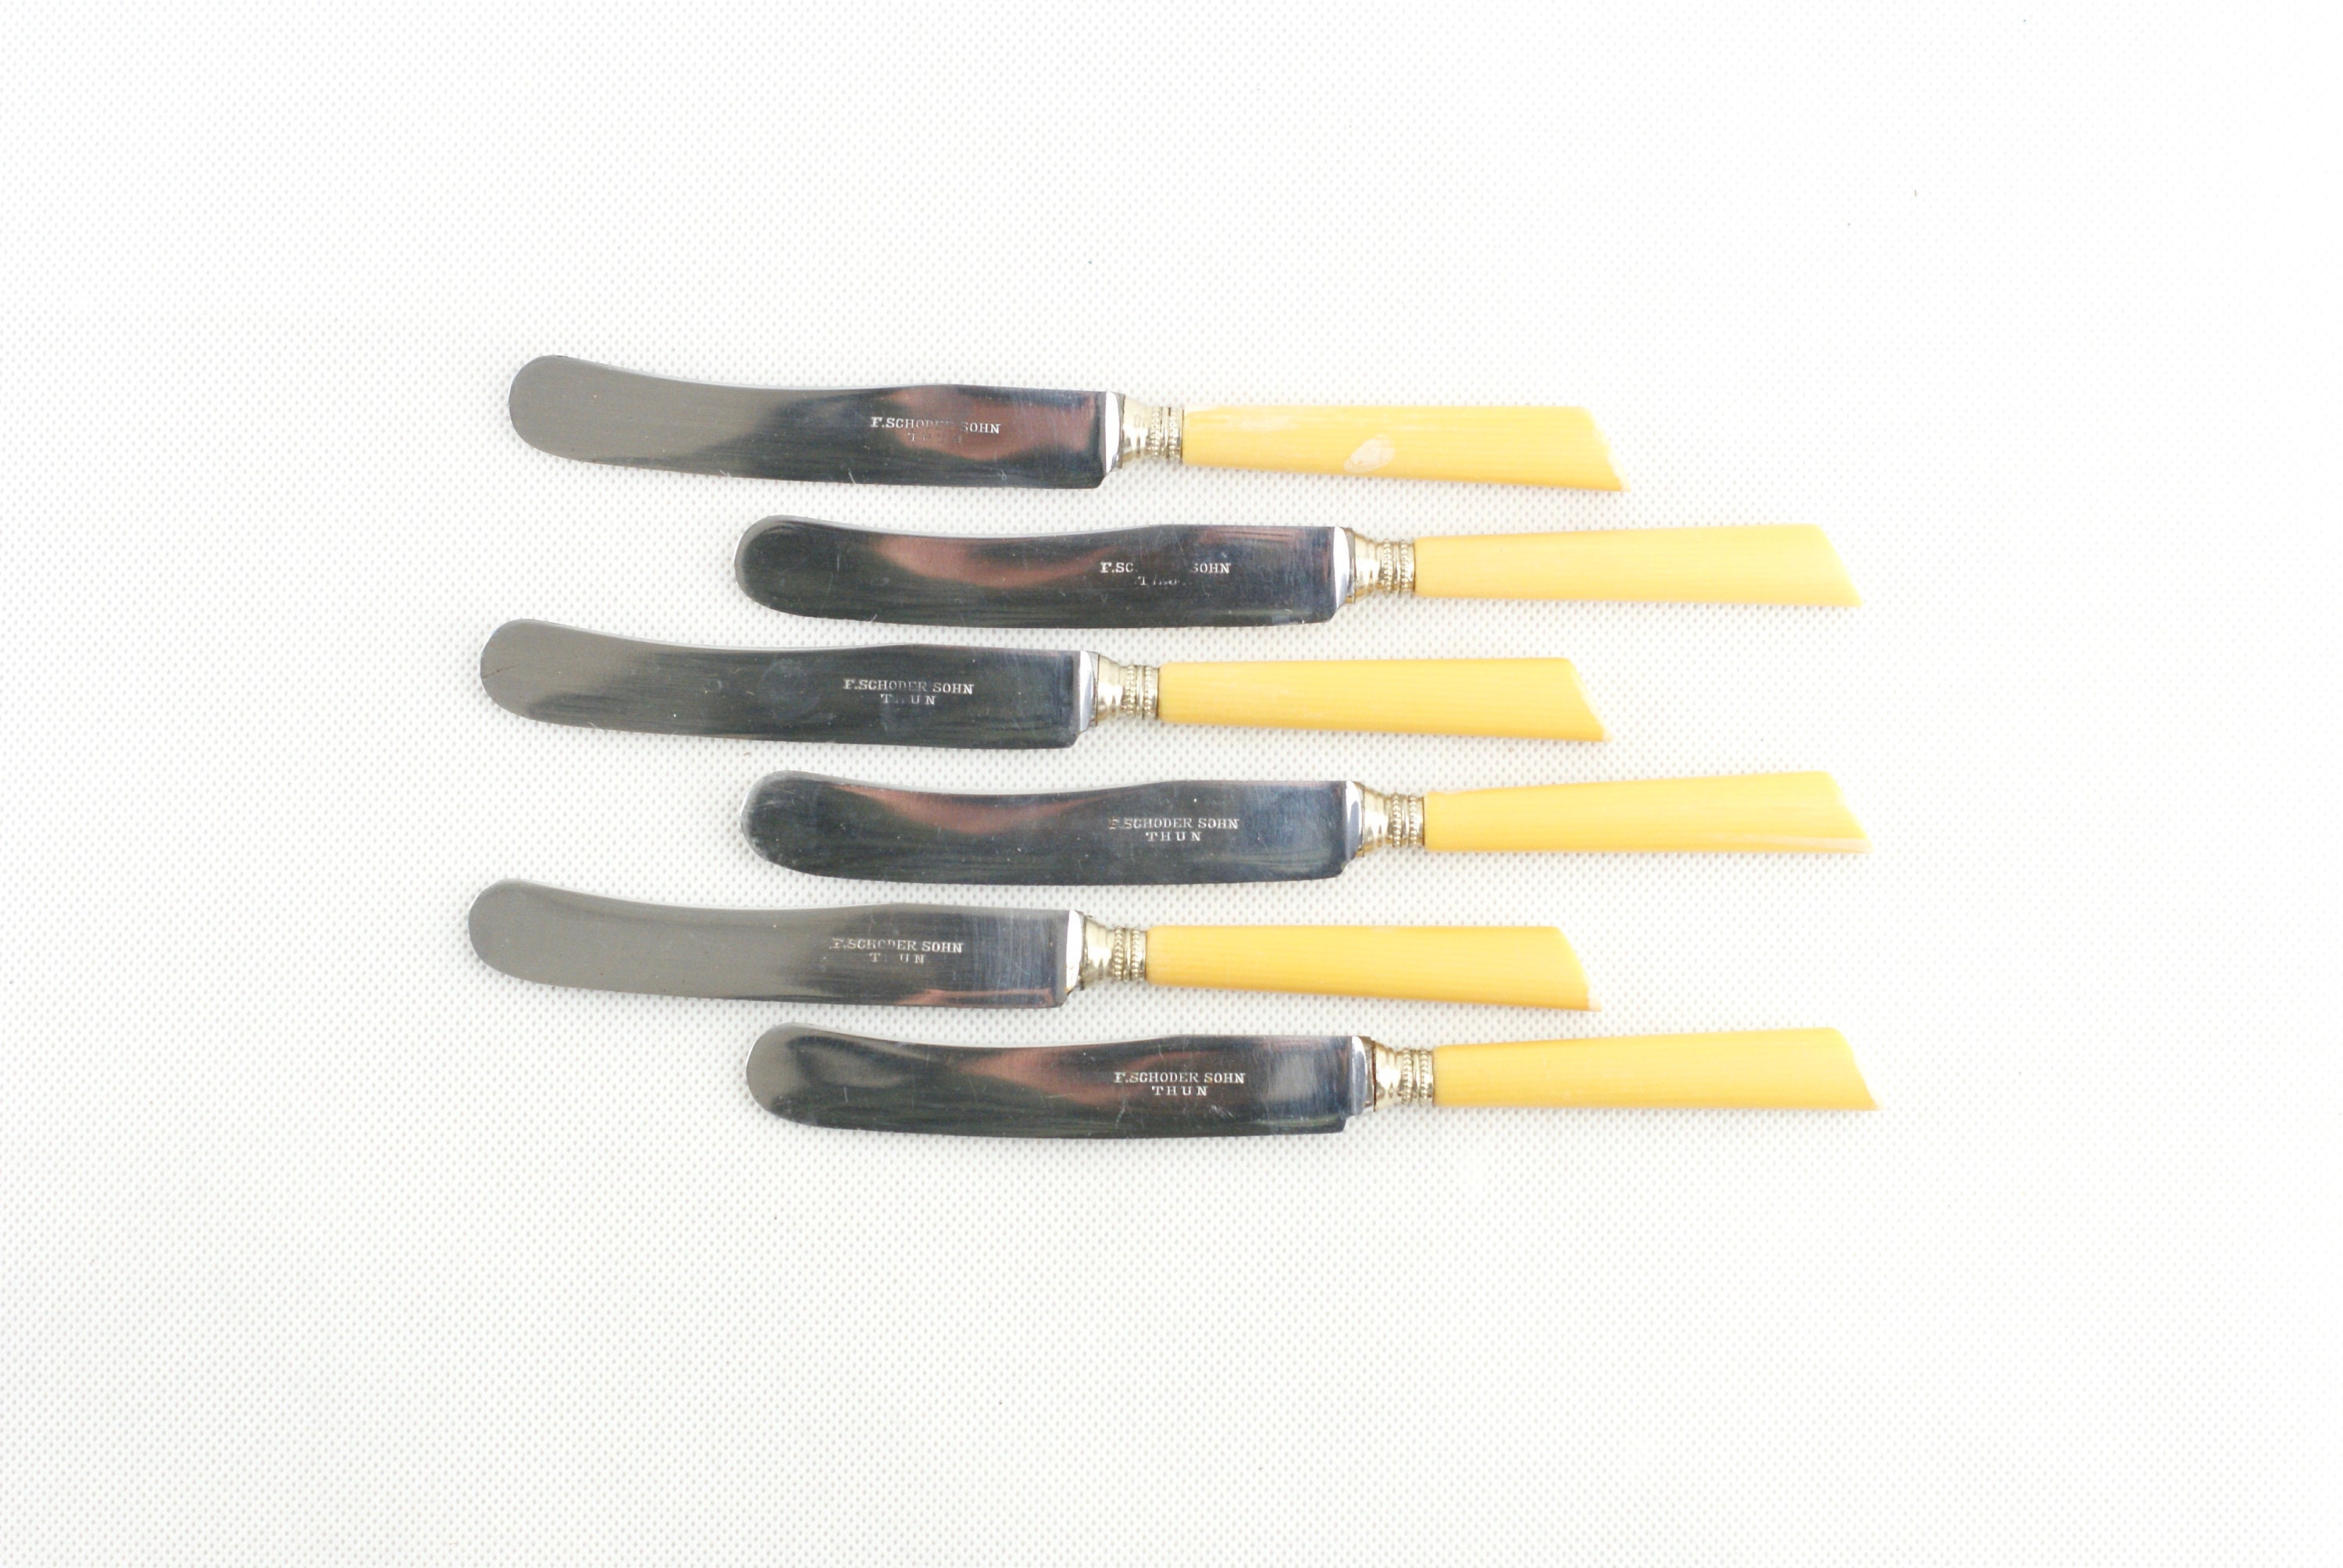 Vintage Red Lucite Handle Butter Knife Set of 4 Retro Knives